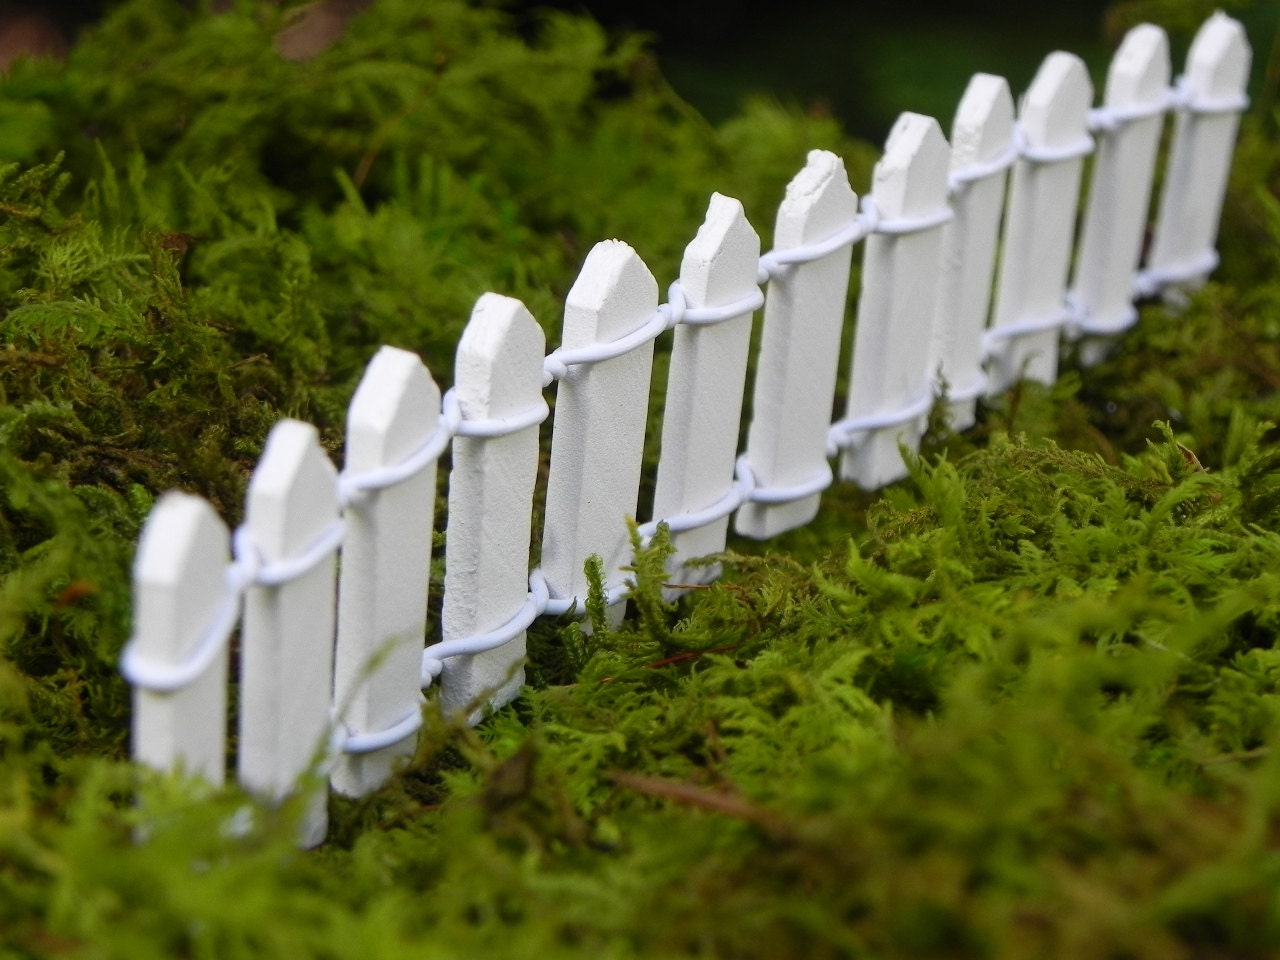 Miniature White Wood Picket Fence Fairy Garden Supply Dollhouse Decor Accessory 